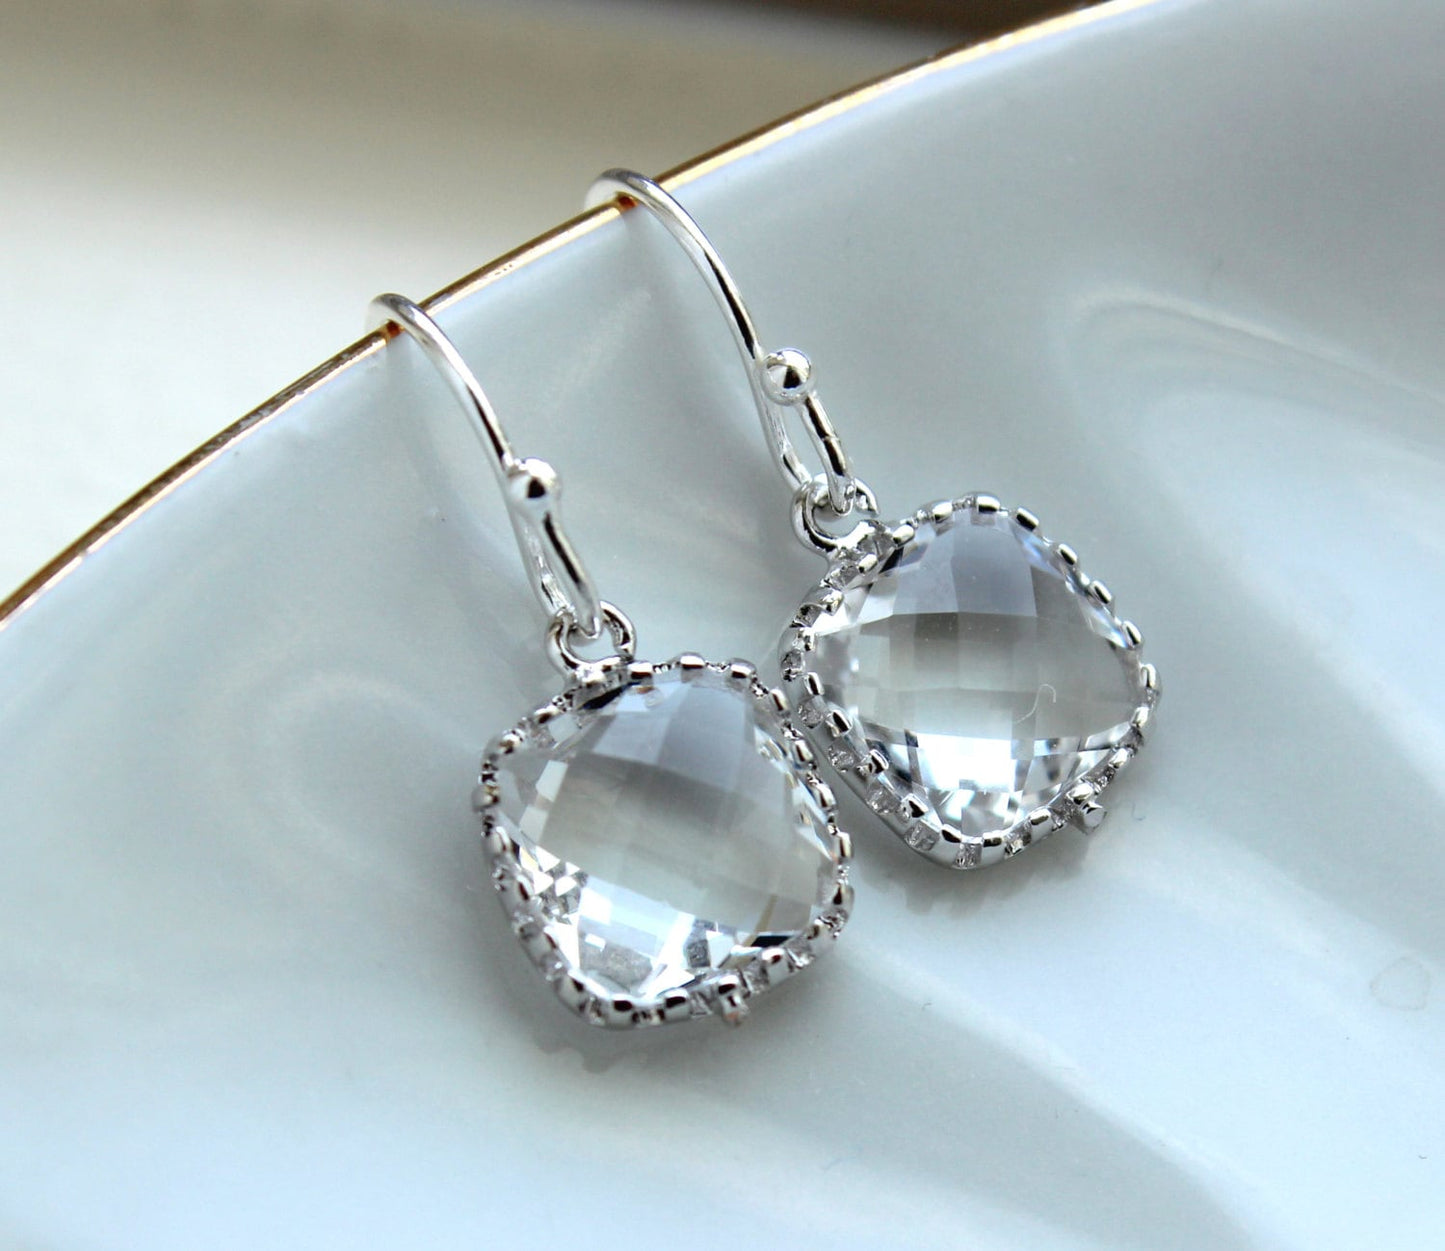 Dainty Small Silver Crystal Earrings - Crystal Clear Bridesmaid Earrings - Wedding Earrings - Silver Wedding Jewelry - Bridal Earrings